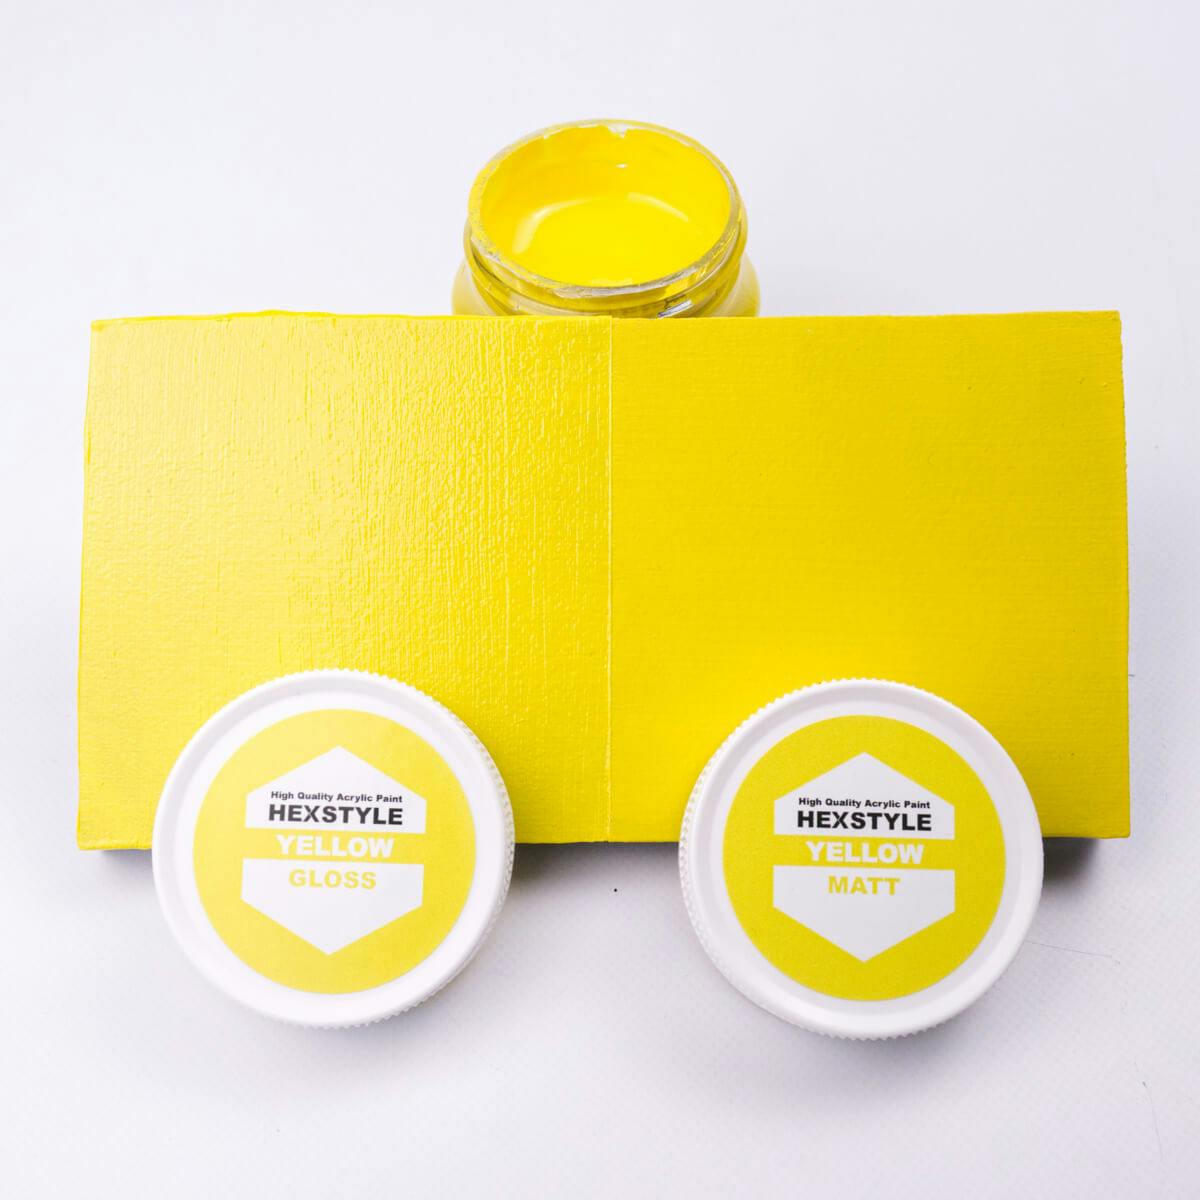 Hexstyle gloss and matt yellow colour swatch